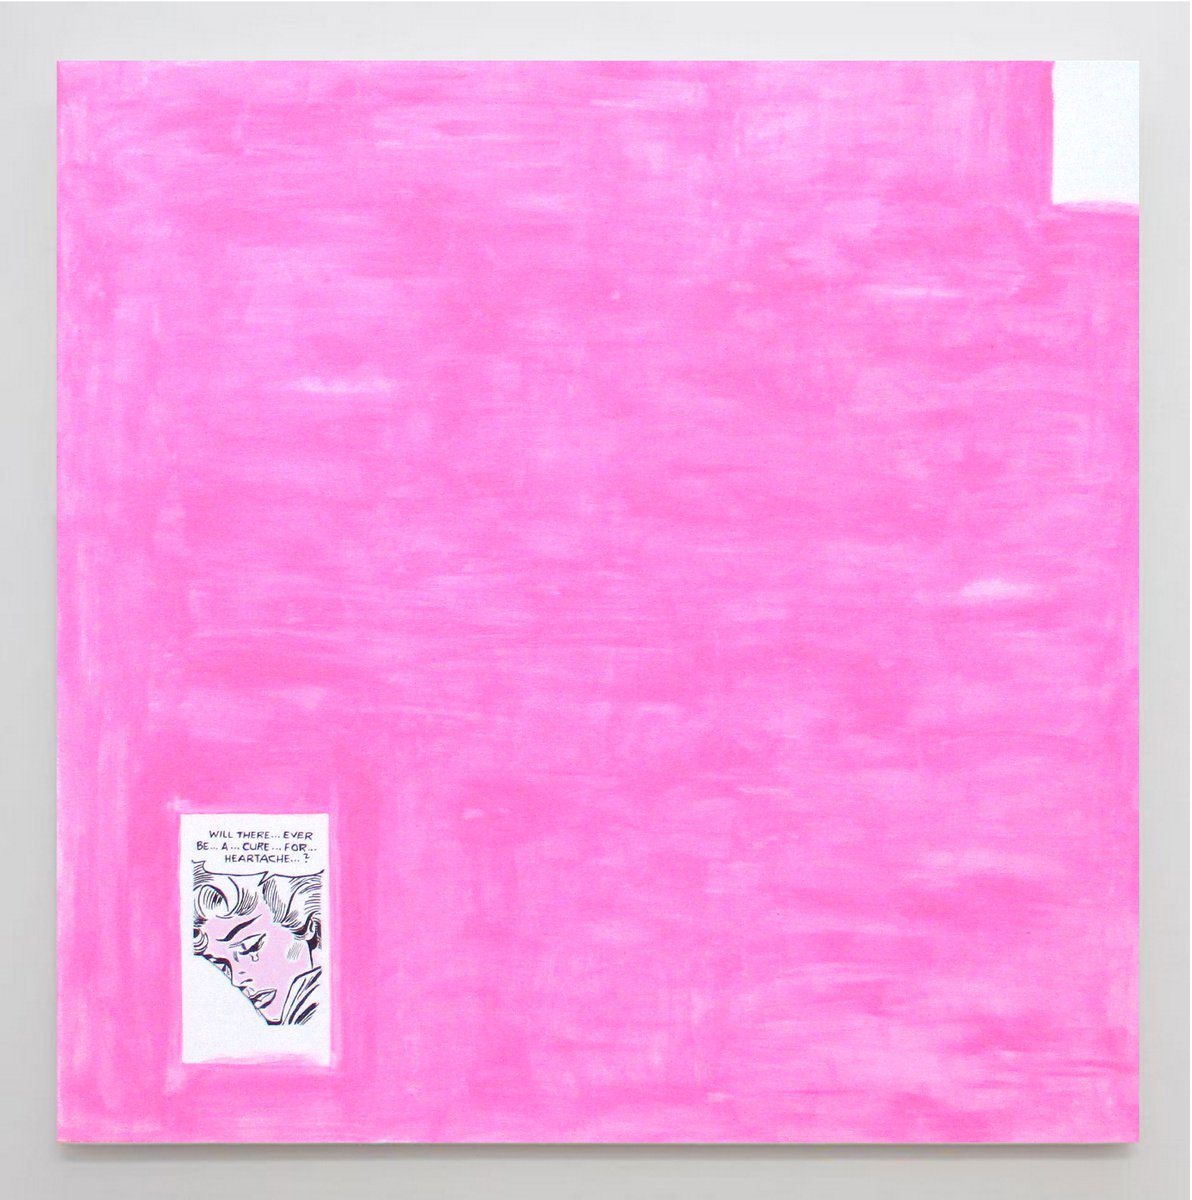 Slave to Love (Pop art abstract pink) by SUPER POP BOY - Pop Art